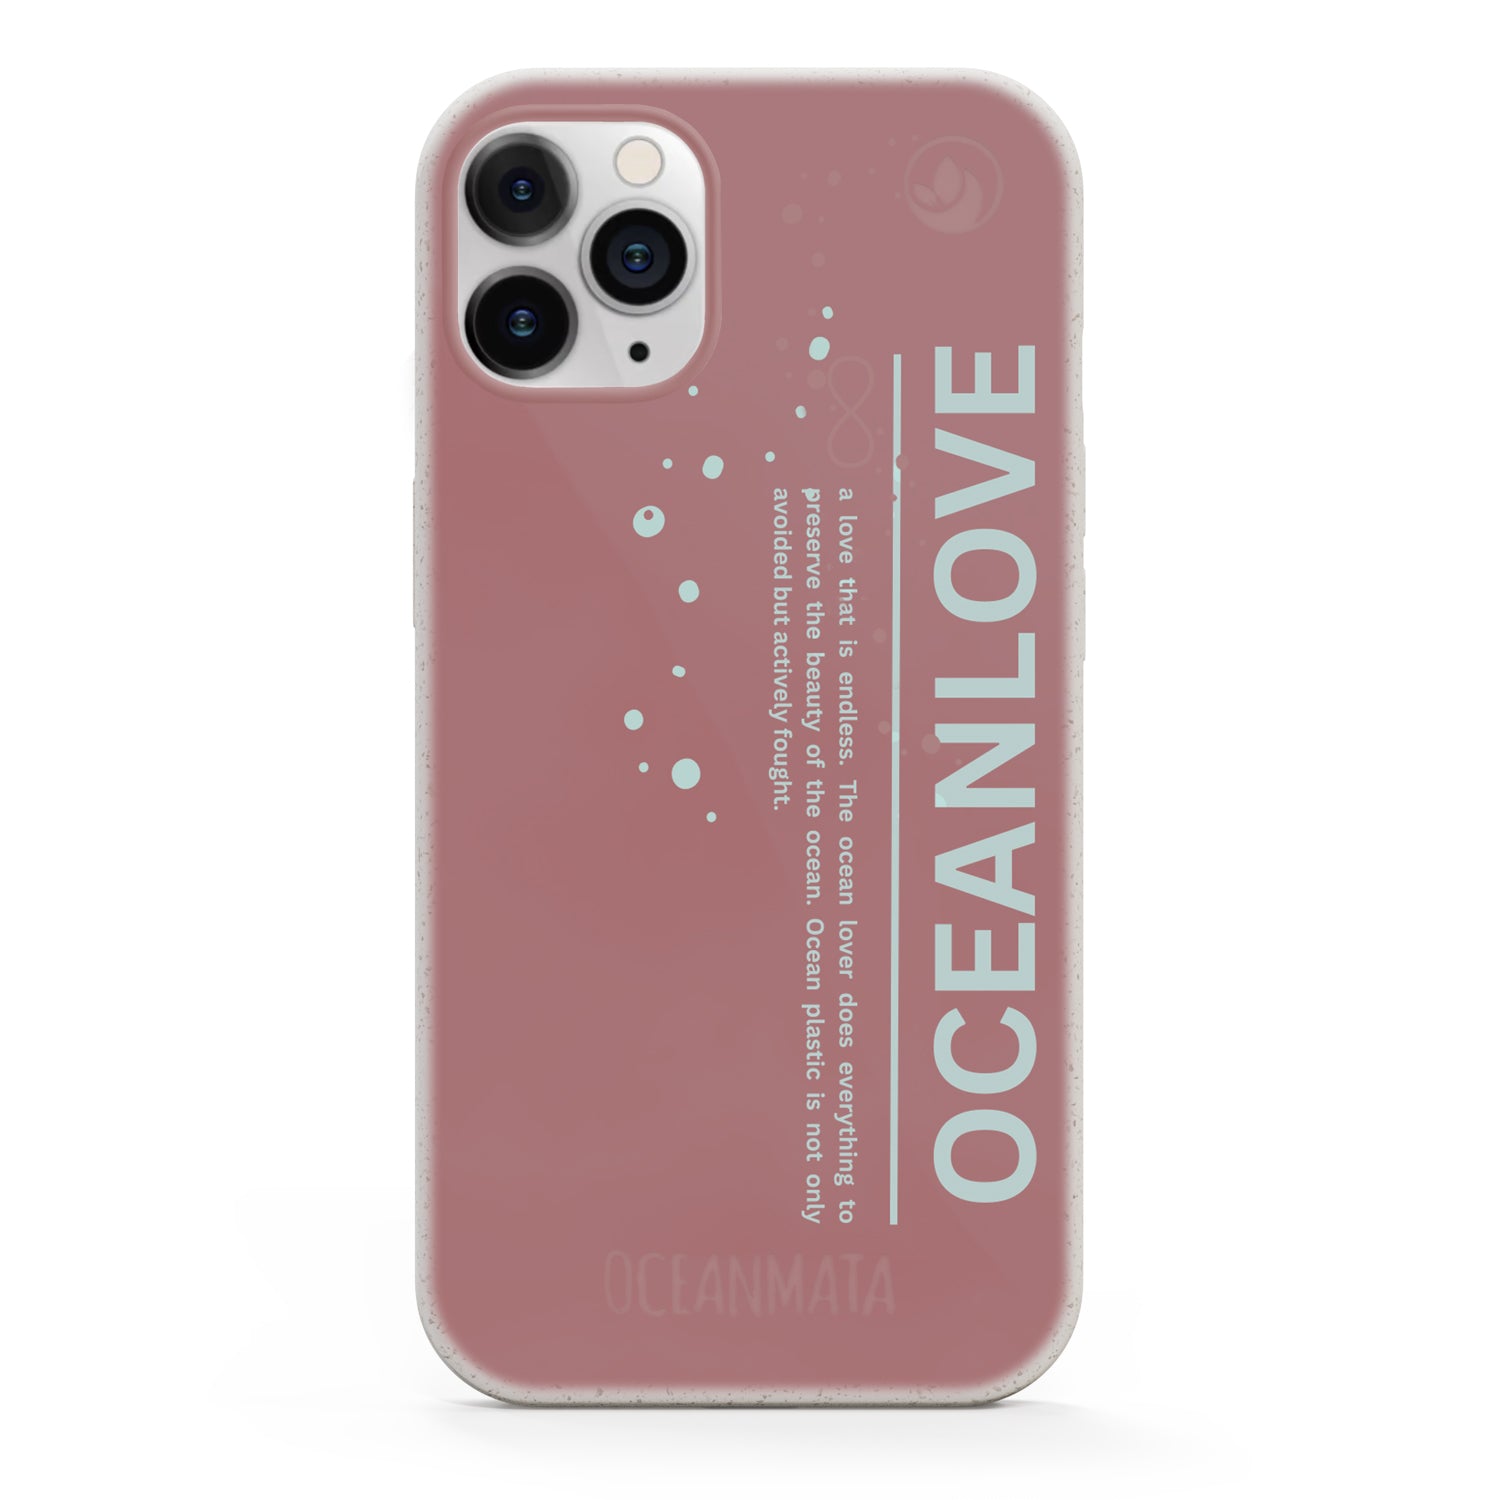 nachhaltige Apple iPhone Hülle "Limited Edition - Oceanlove"